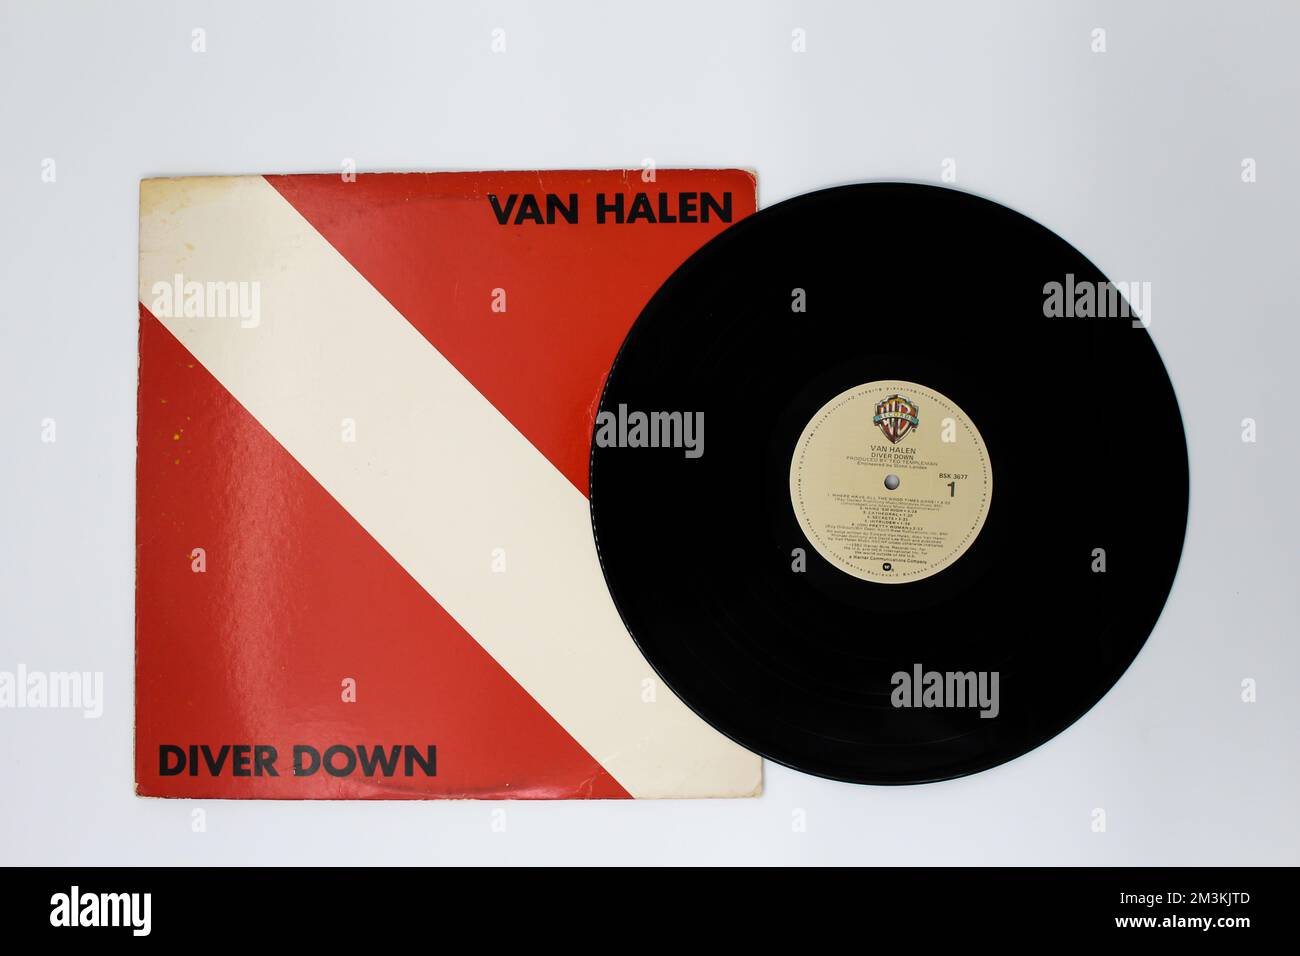 Hard rock, heavy metal and glam metal band, Van Halen music album on vinyl record LP disc. Titled: Diver Down album cover Stock Photo